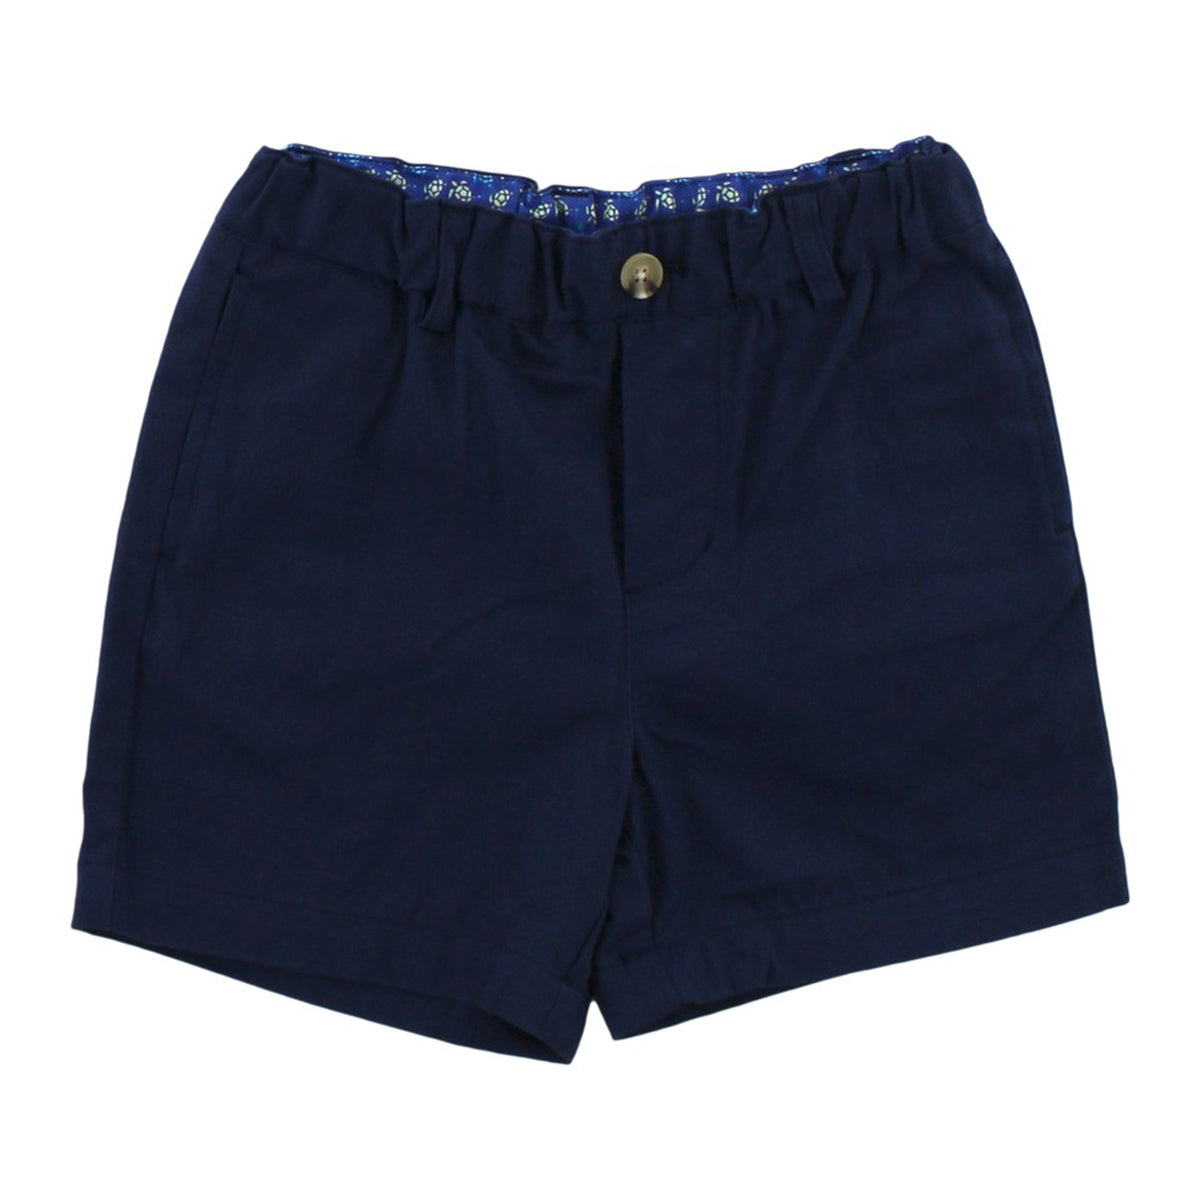 J. Bailey Navy Blue Toddler Boy's Chino Shorts by Bailey Boys